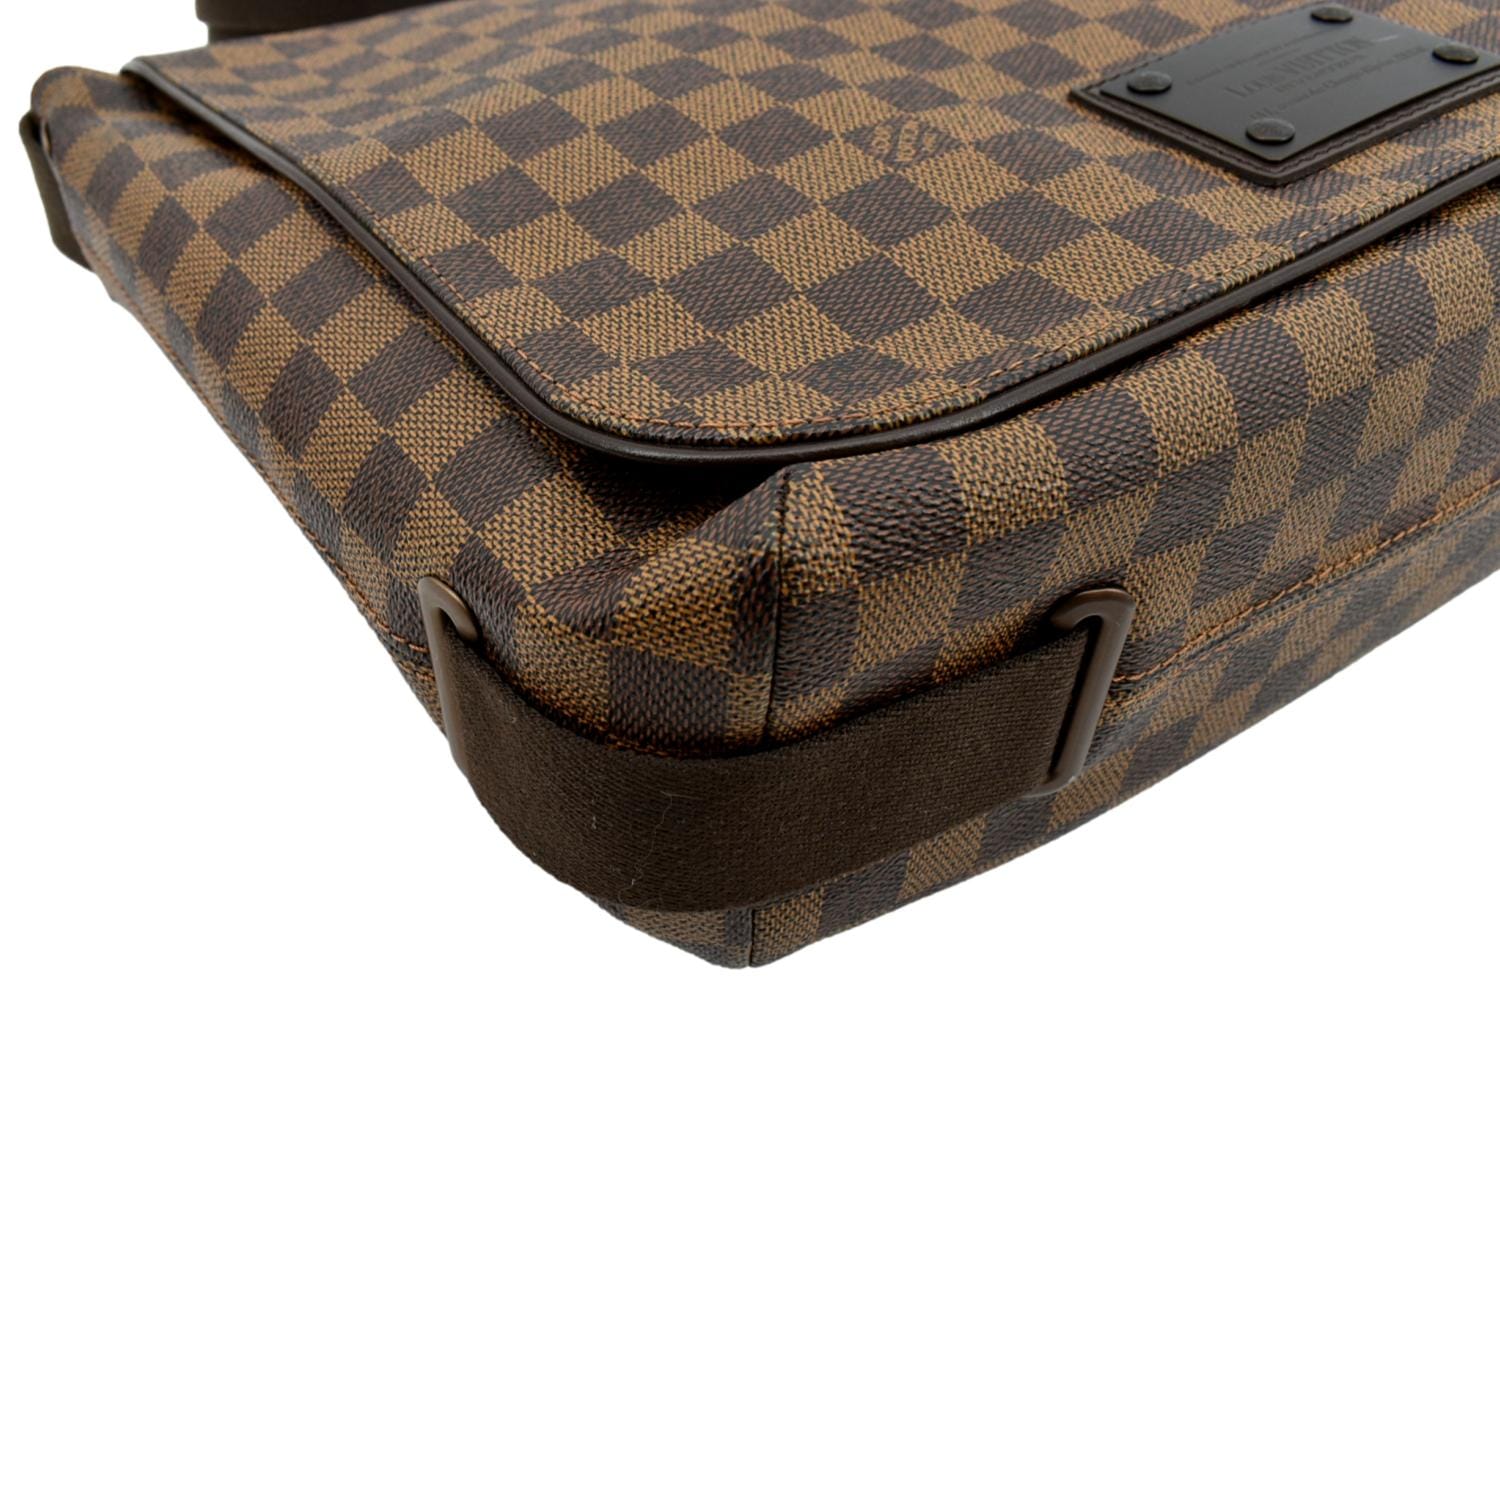 Louis Vuitton pre-owned Damier Ebène Brooklyn Shoulder Bag - Farfetch